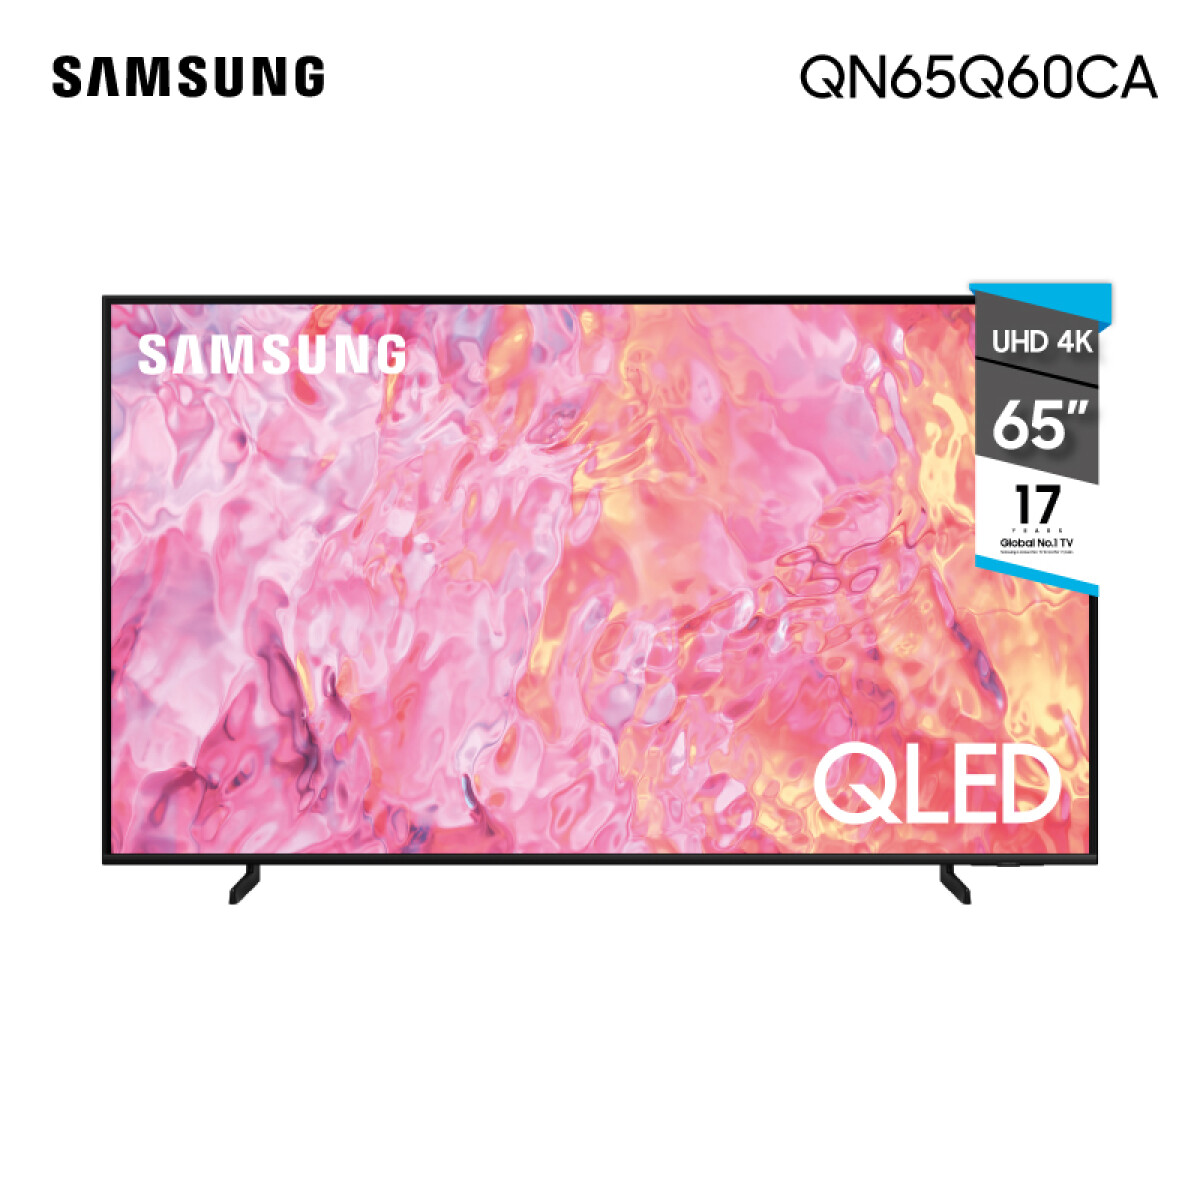 Tv Qled Smart 65" Uhd 4K Samsung SAQN65Q60CA - 001 